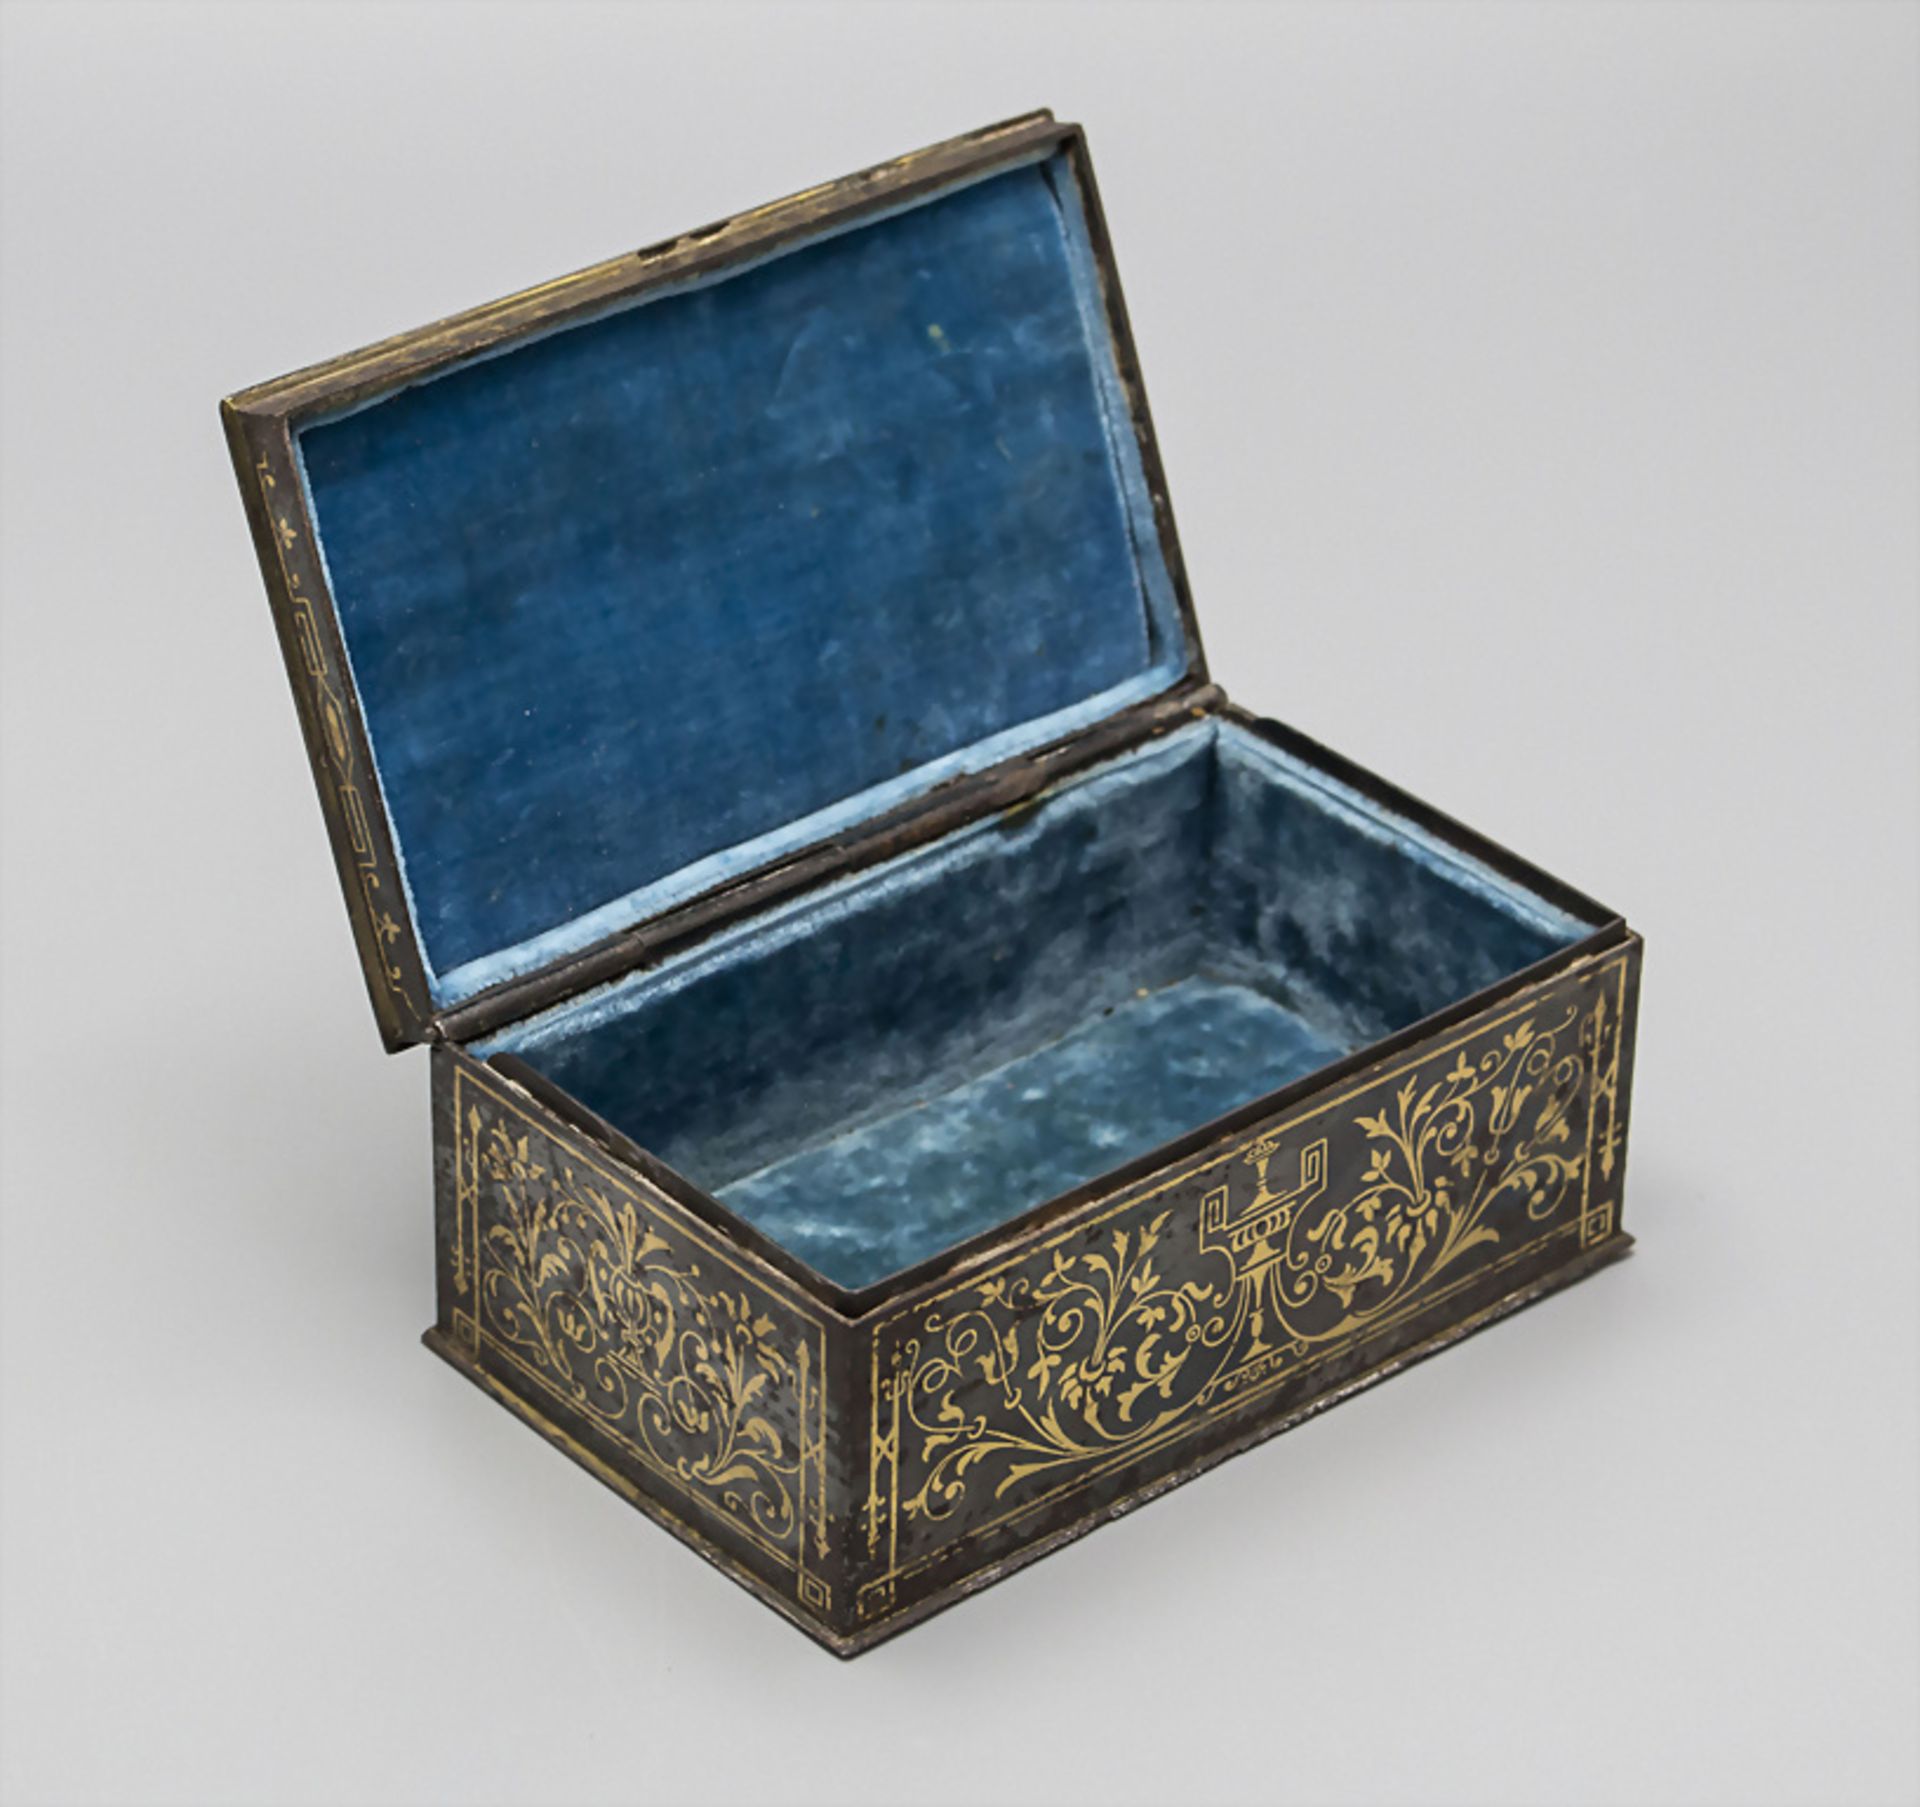 Louis-Seize Schmuckdose / A Louis Seize jewelry box, 18. Jh. - Image 2 of 7